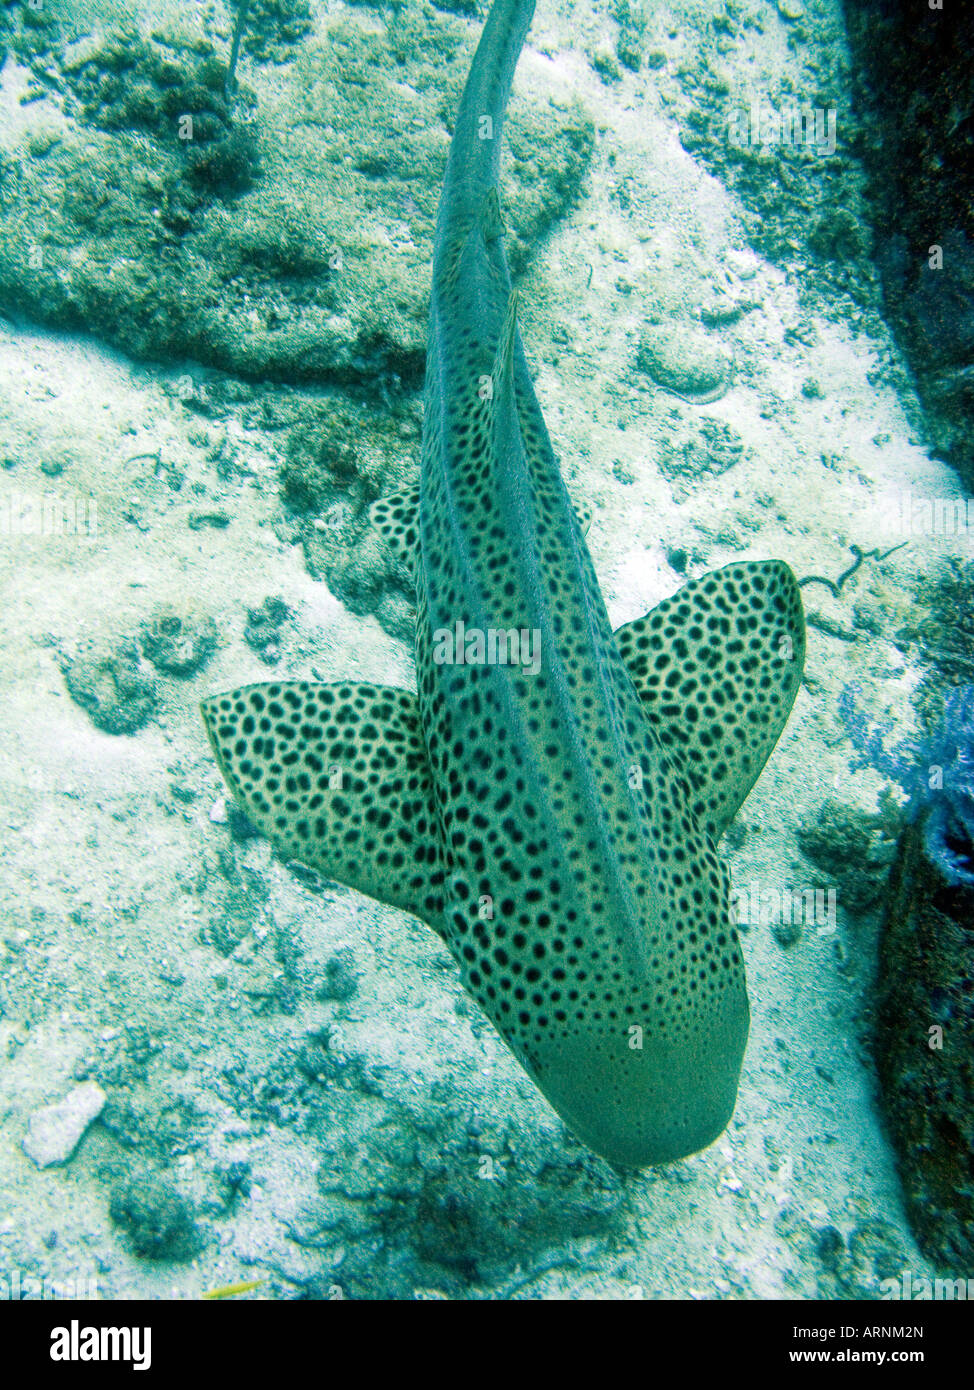 Leopard shark stegostoma fasciatum on resting on rubble head on shot January 2008 Similan islands Andaman sea Thailand Stock Photo